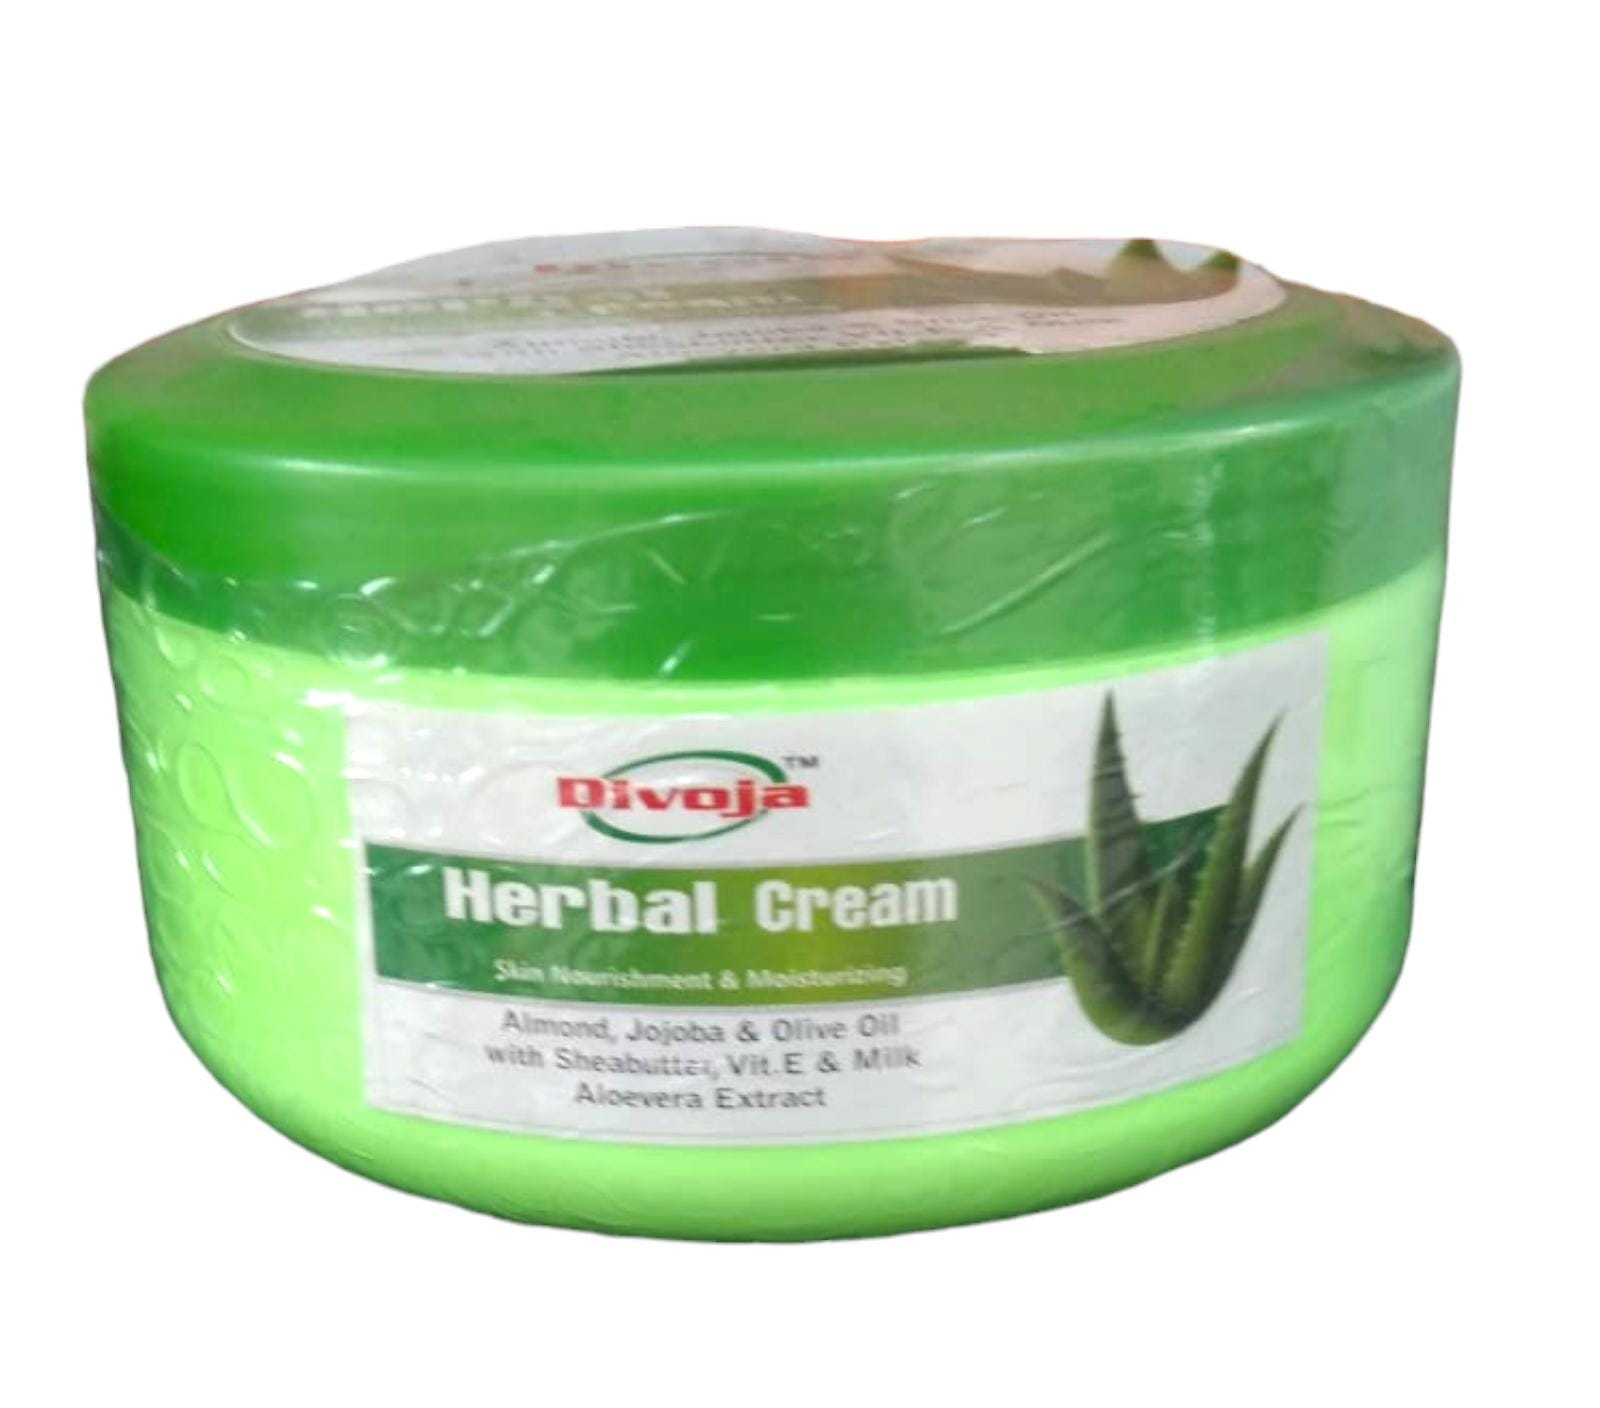 Herbal Cream